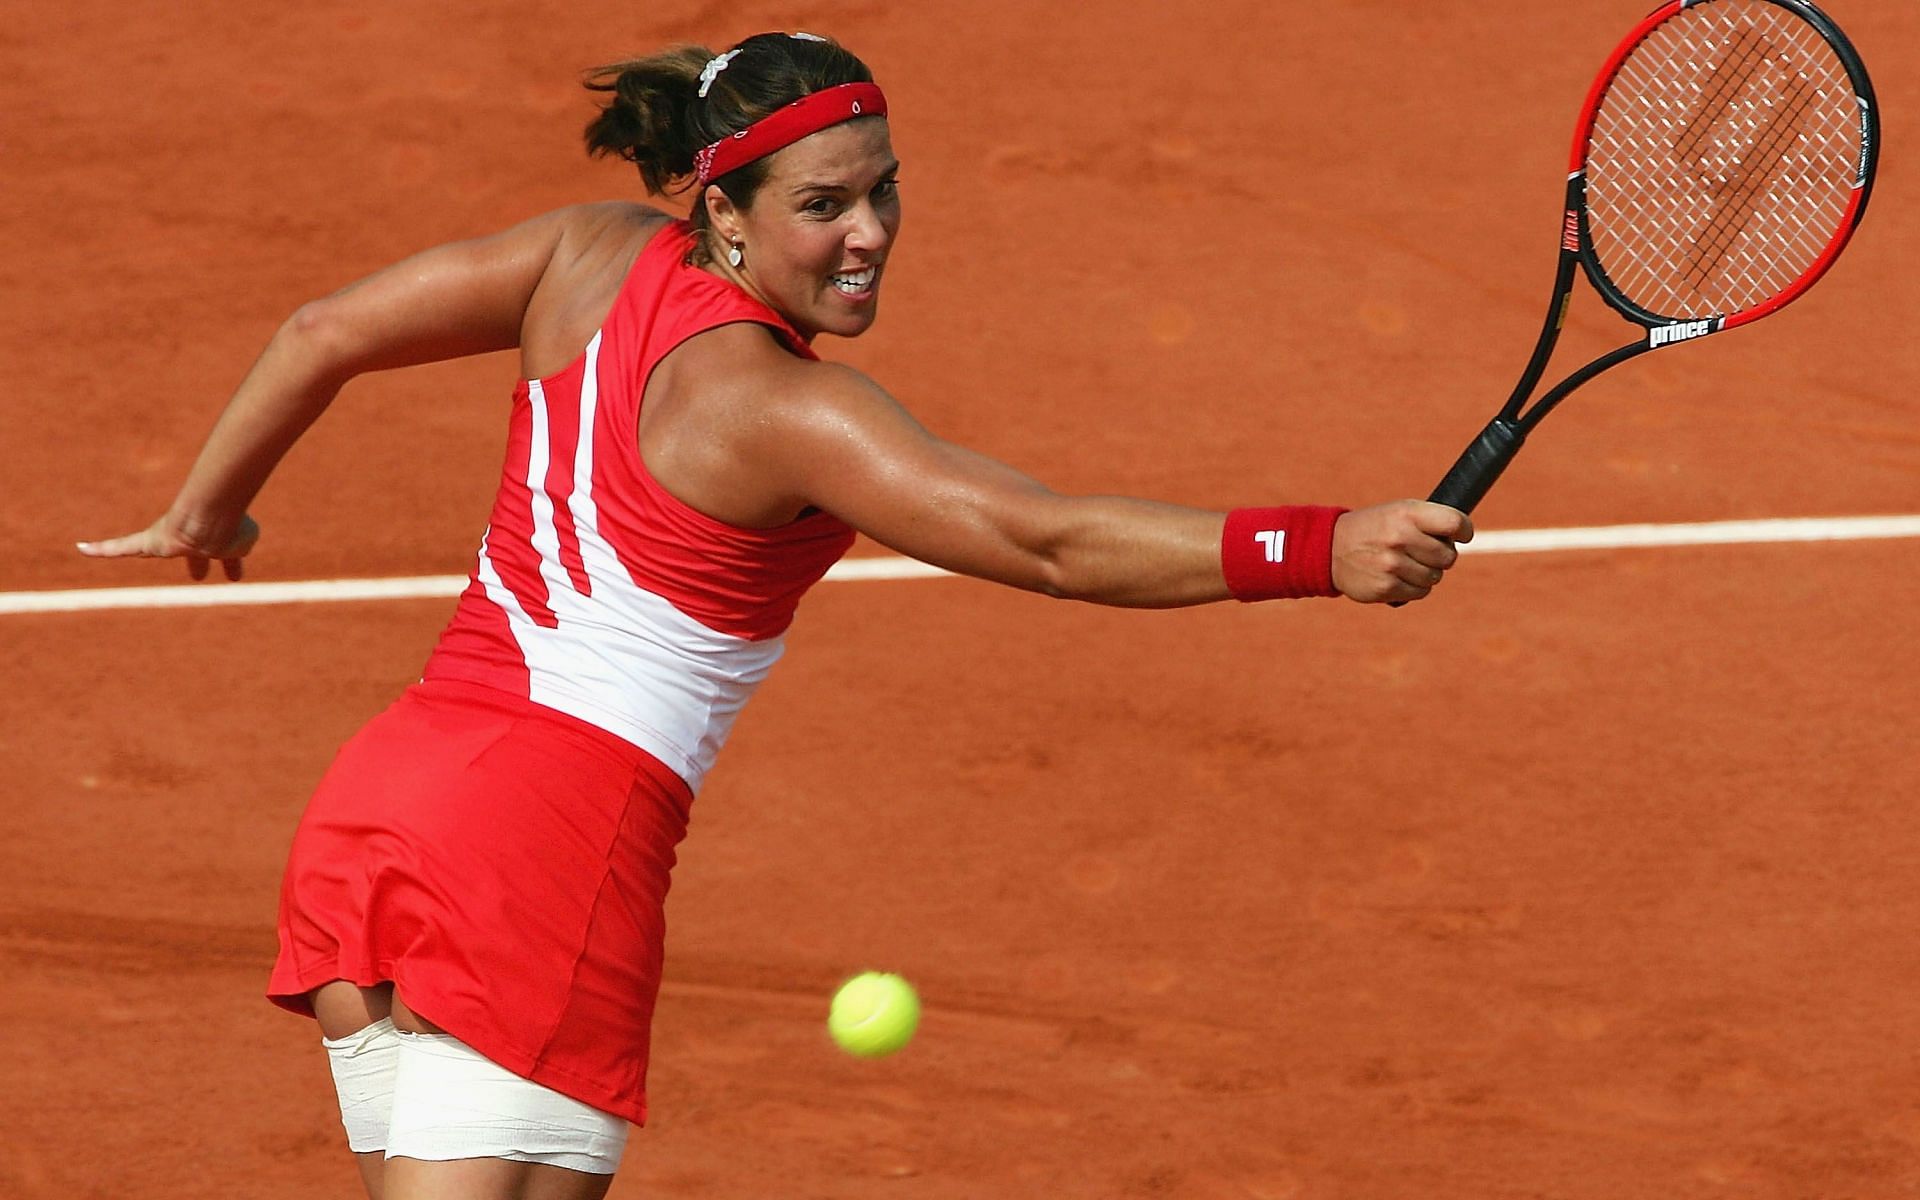 Jennifer Capriati won her only Roland Garros title in 2001